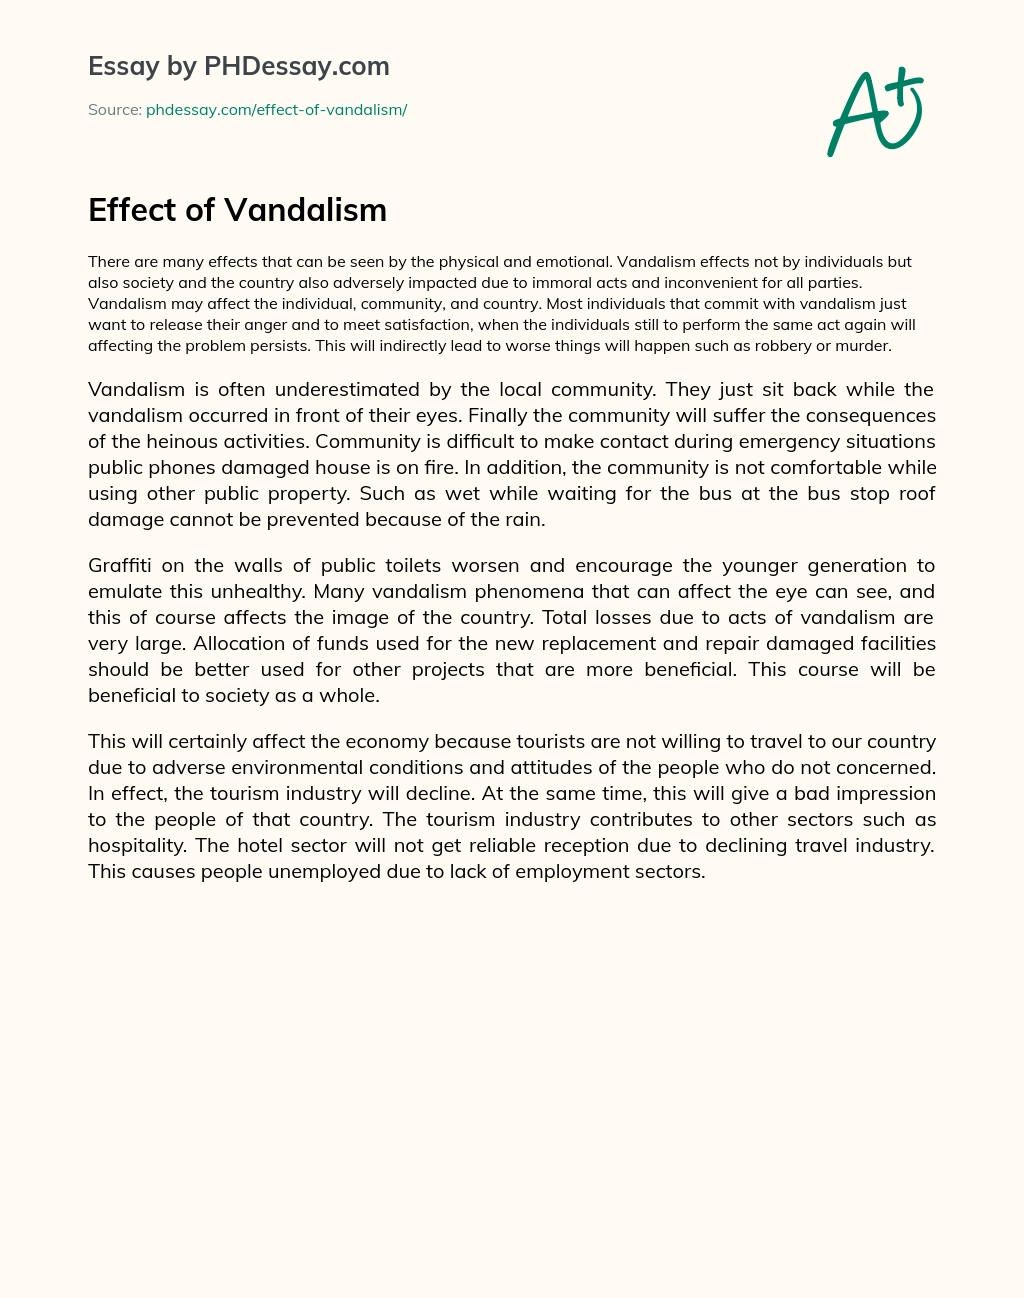 Effect of Vandalism essay